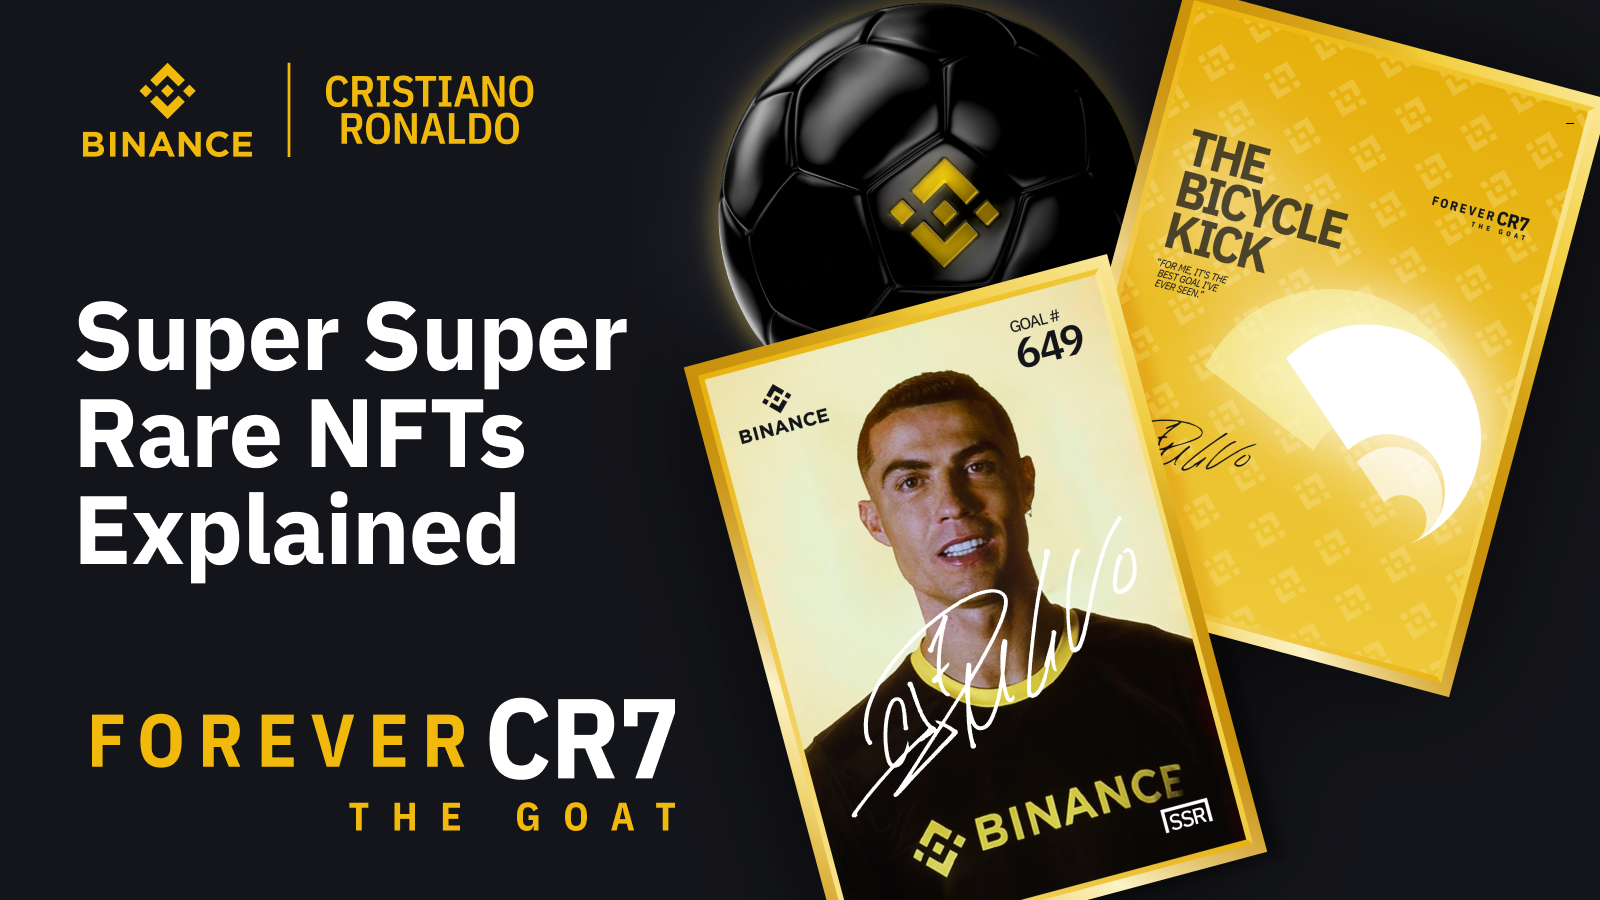 Collect NFTs Ronaldo Training